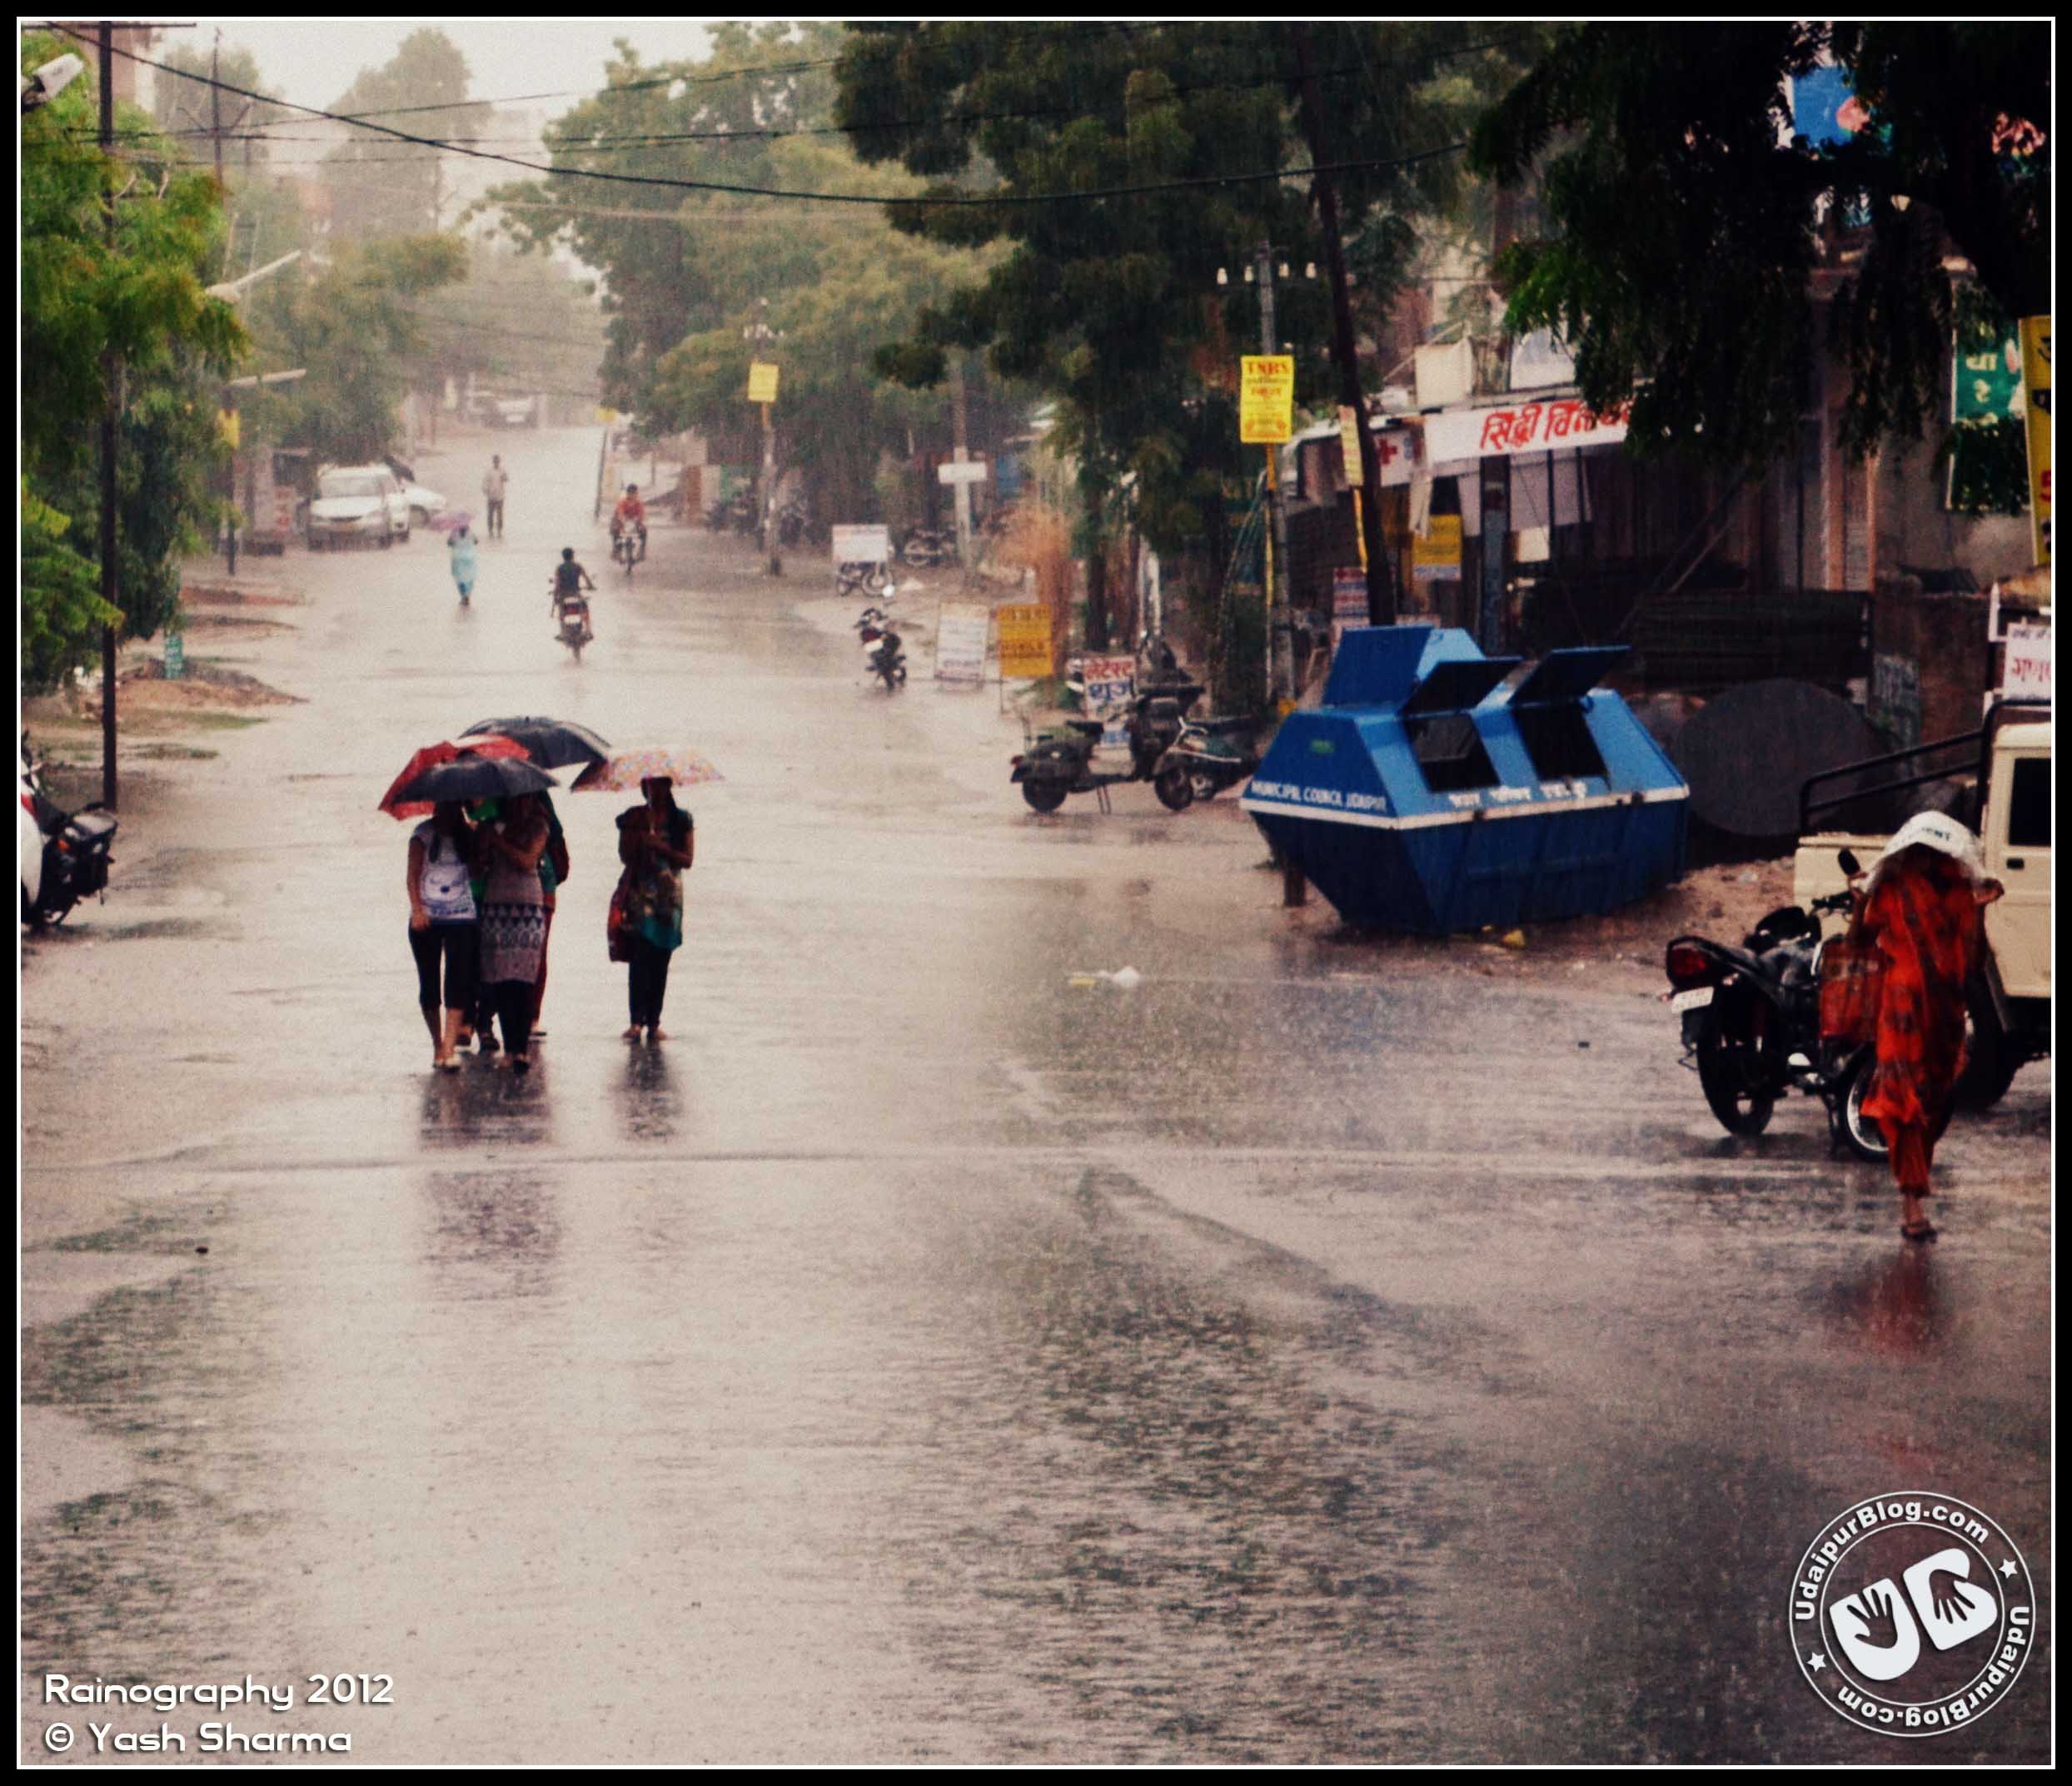 Rainography_2012_Yash_Sharma